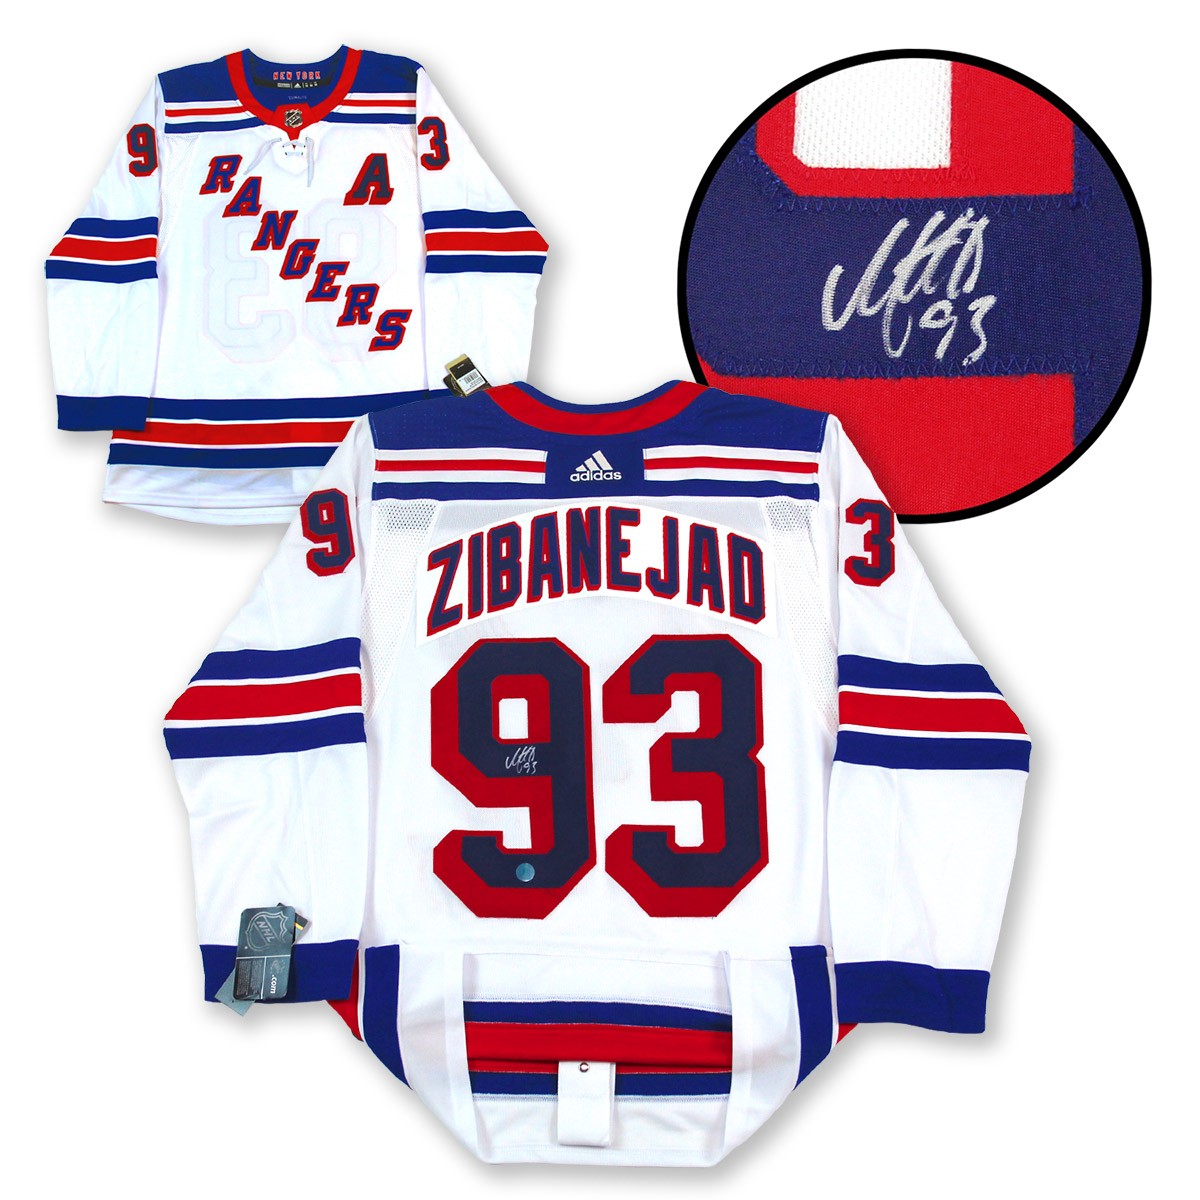 Mika Zibanejad New York Rangers Jersey NHL Fan Apparel & Souvenirs